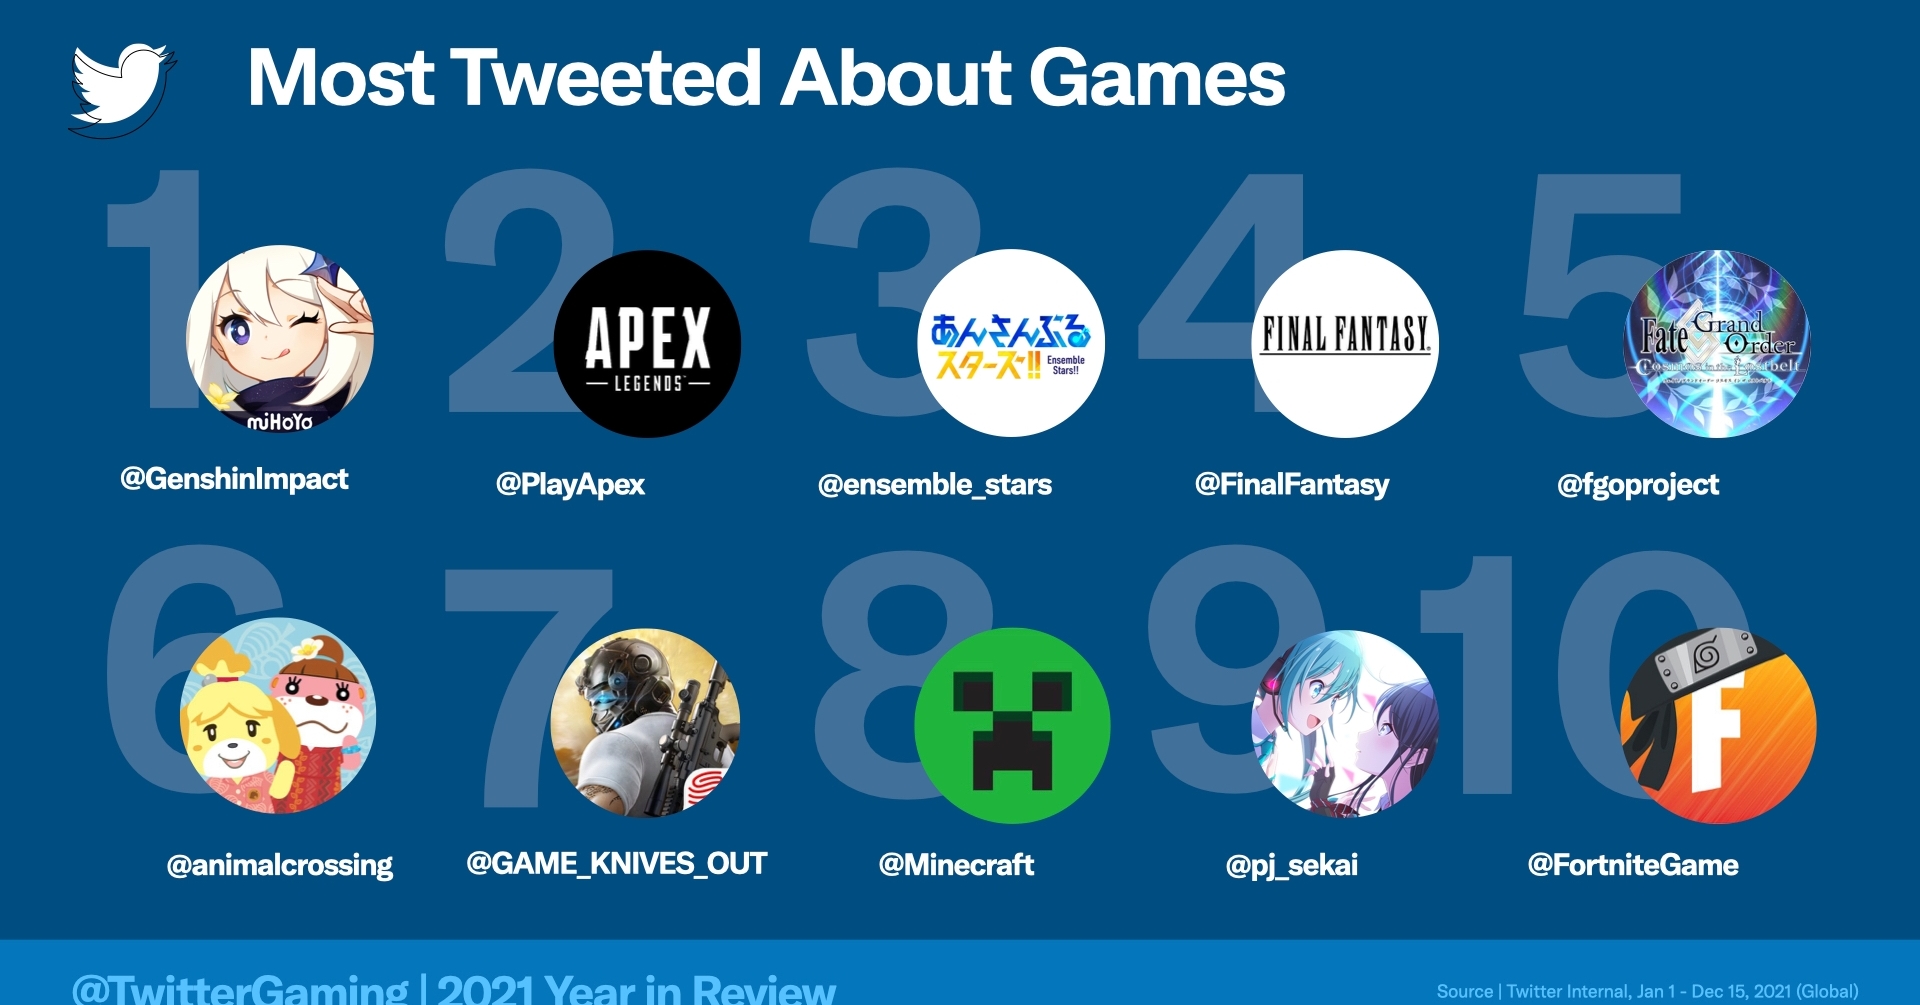 Twitter、2021年のゲーム関連ツイートランキング 最多ツイートは「原神」 - ITmedia NEWS